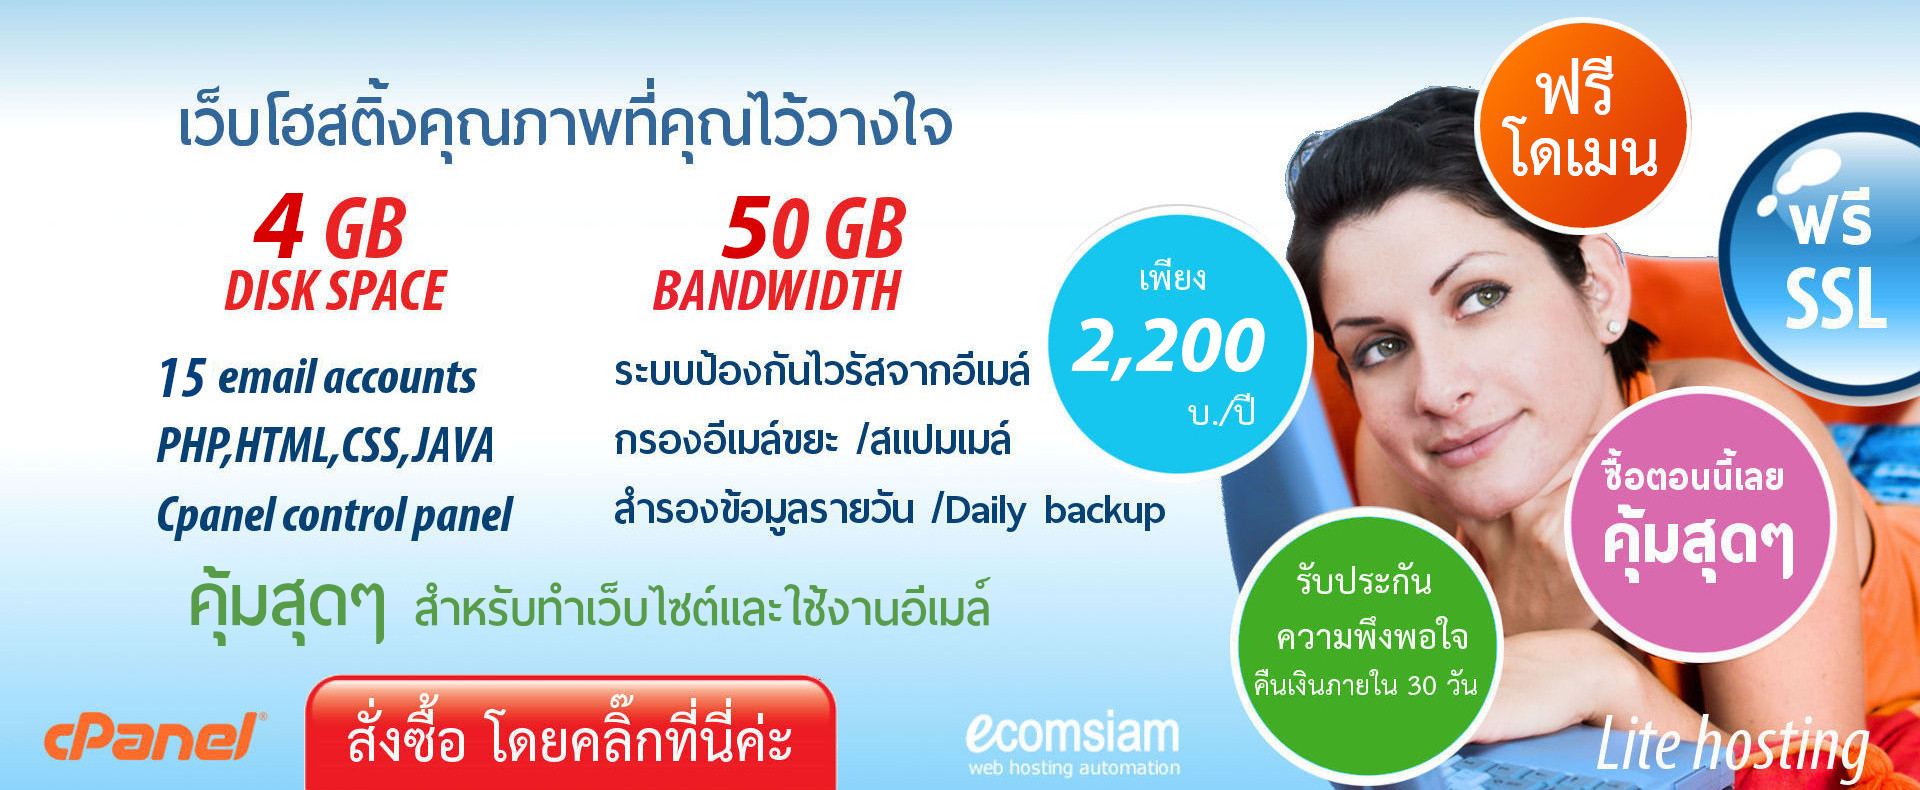 Lite hosting thailand ไทย เพียง 2,200 บาทต่อปี ฟรีโดเมนเนม พร้อมใบรับรอง SSL